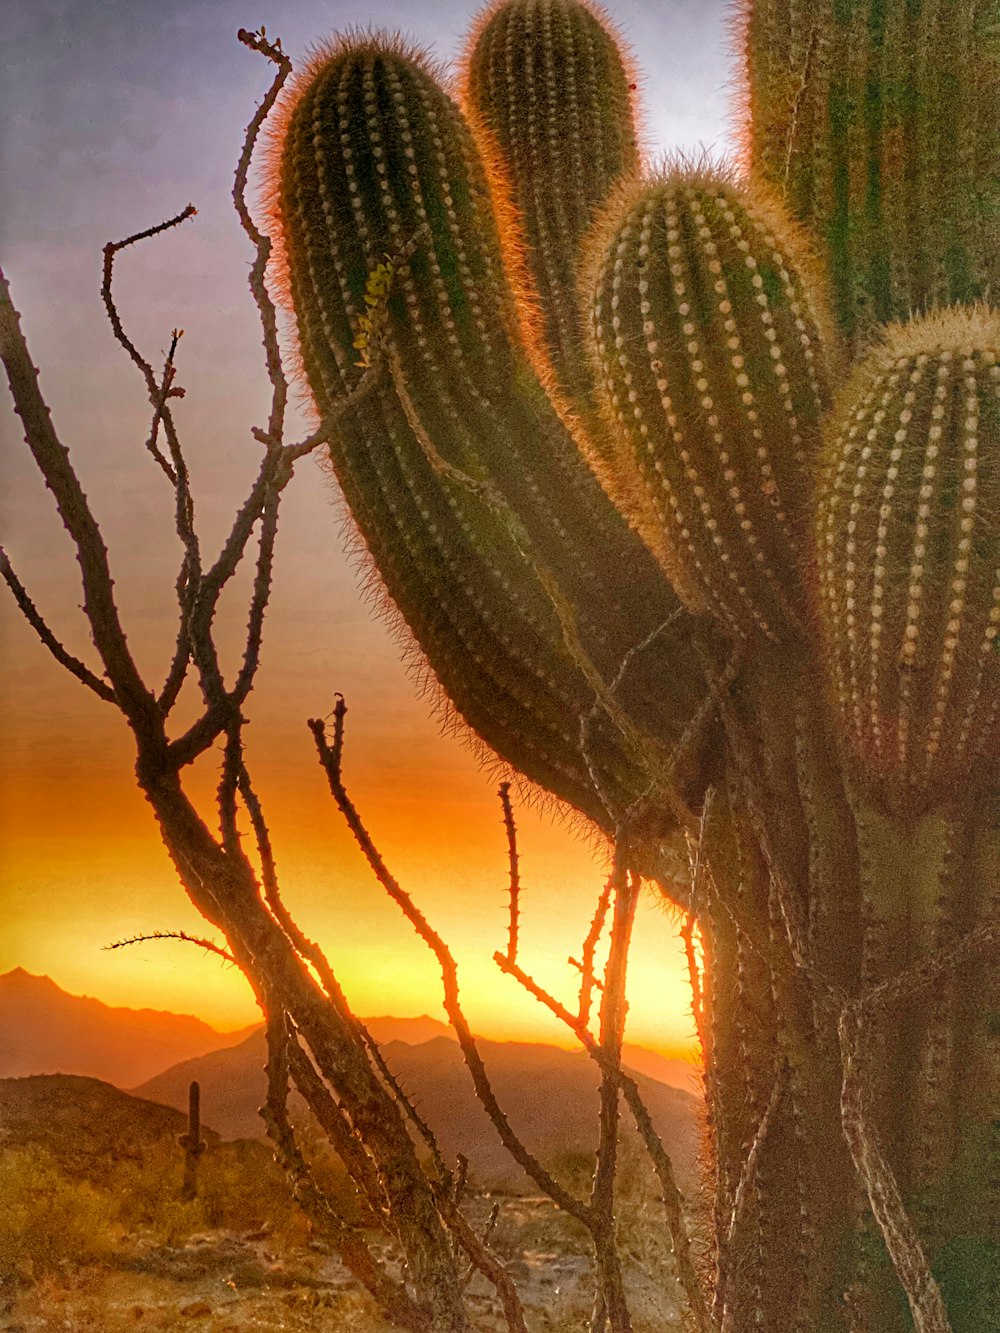 green cactus during golden hour